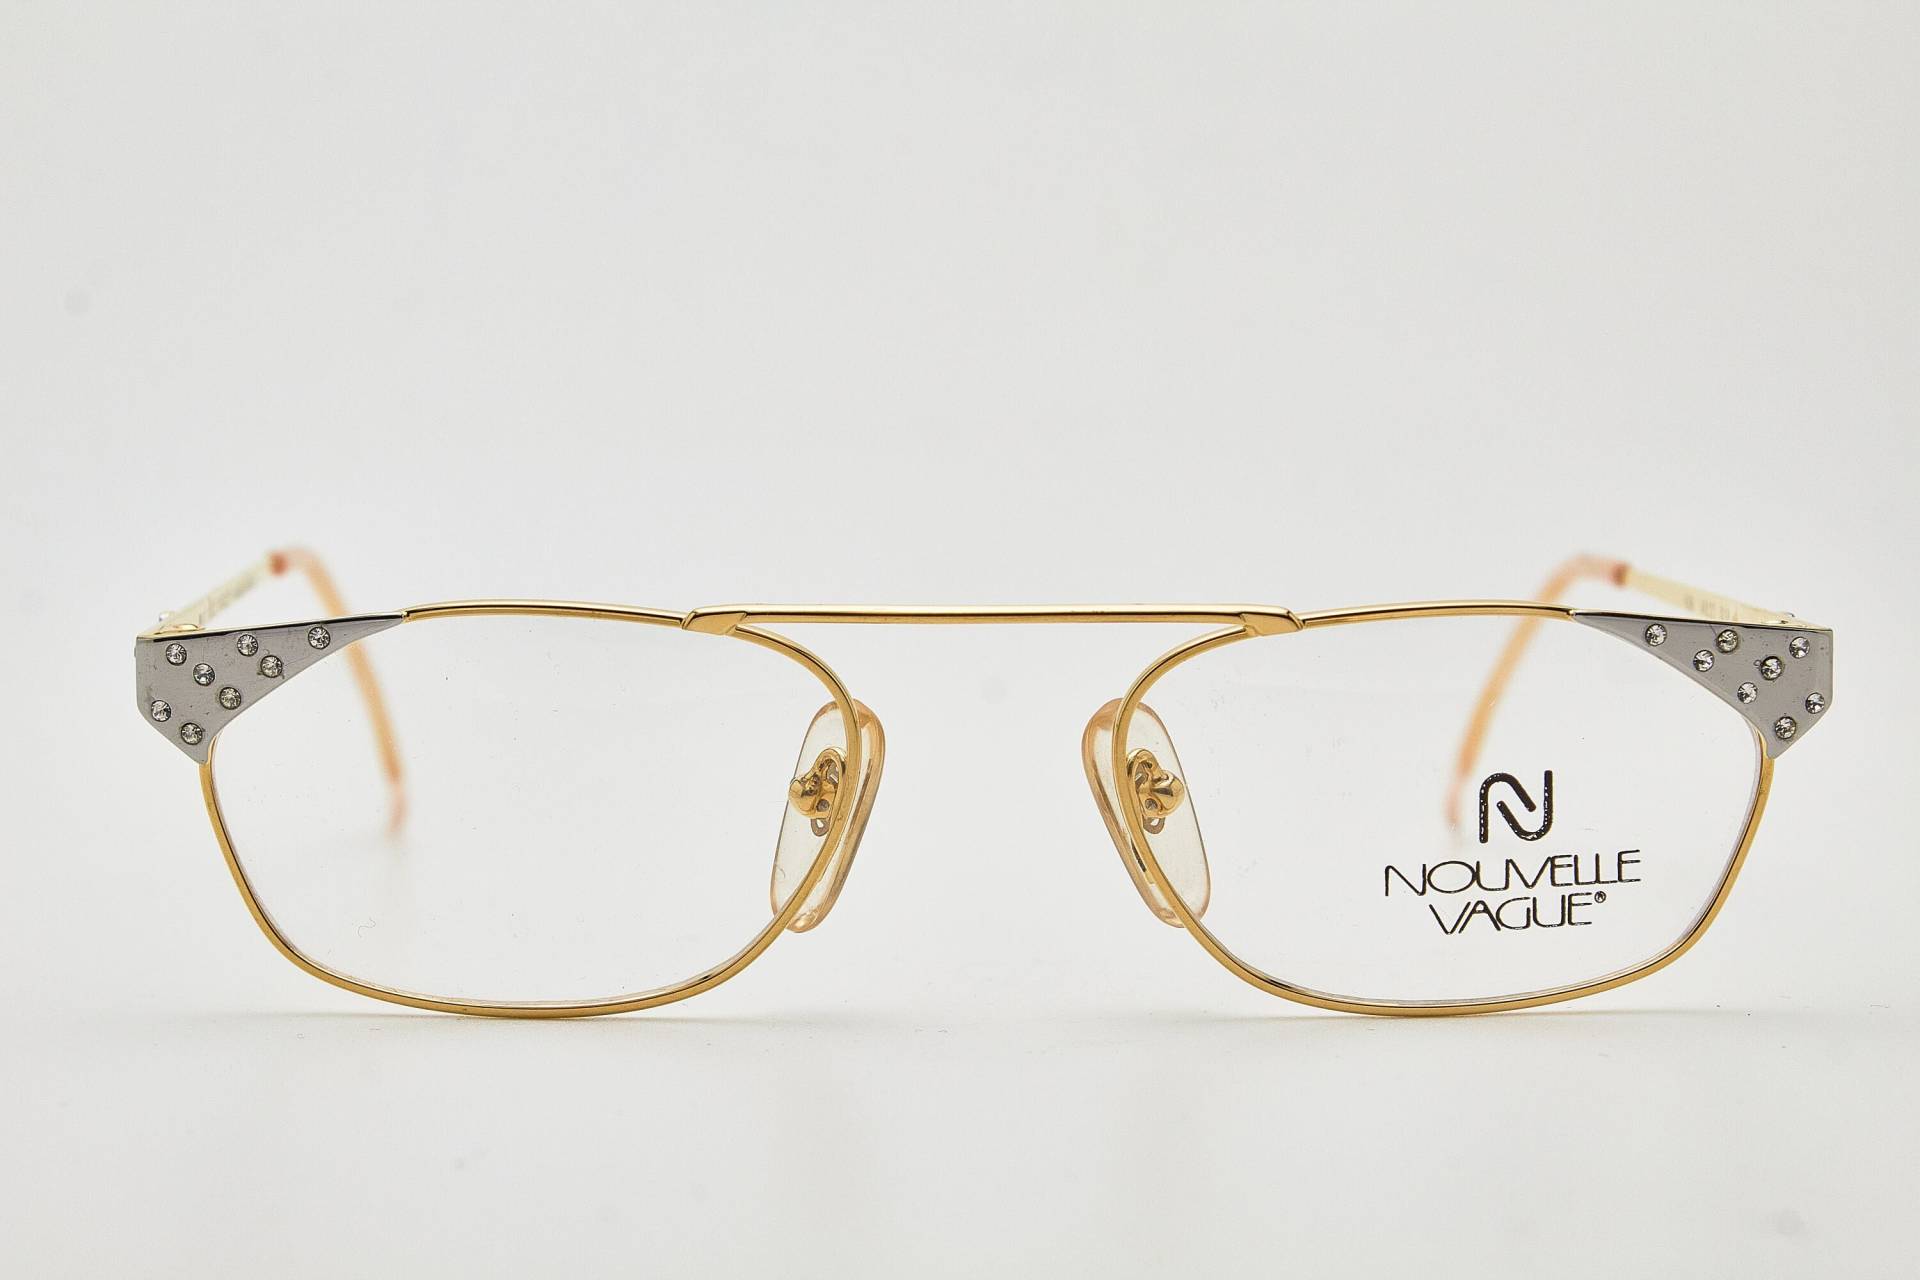 Nouvelle Vague Kim Vintage Brillen 1980Er Jahre Plastik Oversize Sonnenbrille Schmetterlingsbrille Damenbrillen Schmetterlingsbrillen von VintageGlassesVault